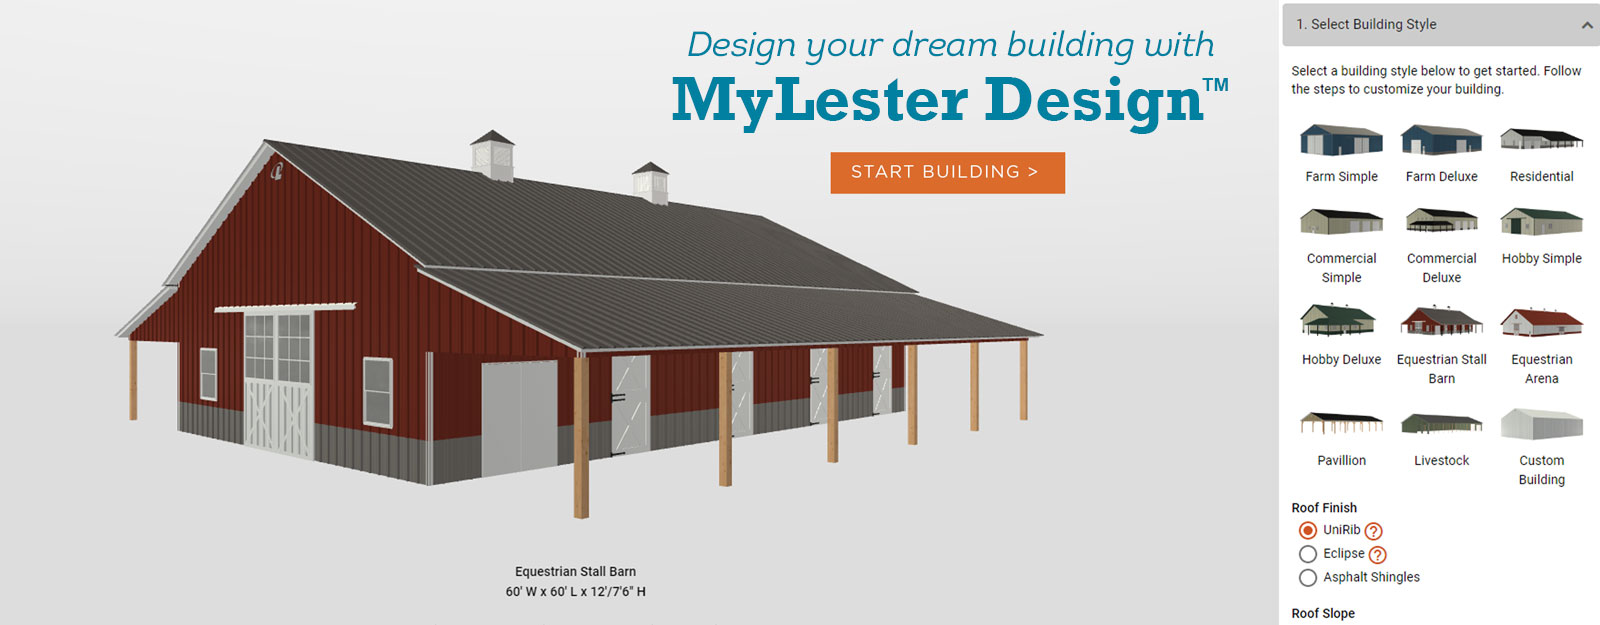 MyLester Design – Design your Dream Building